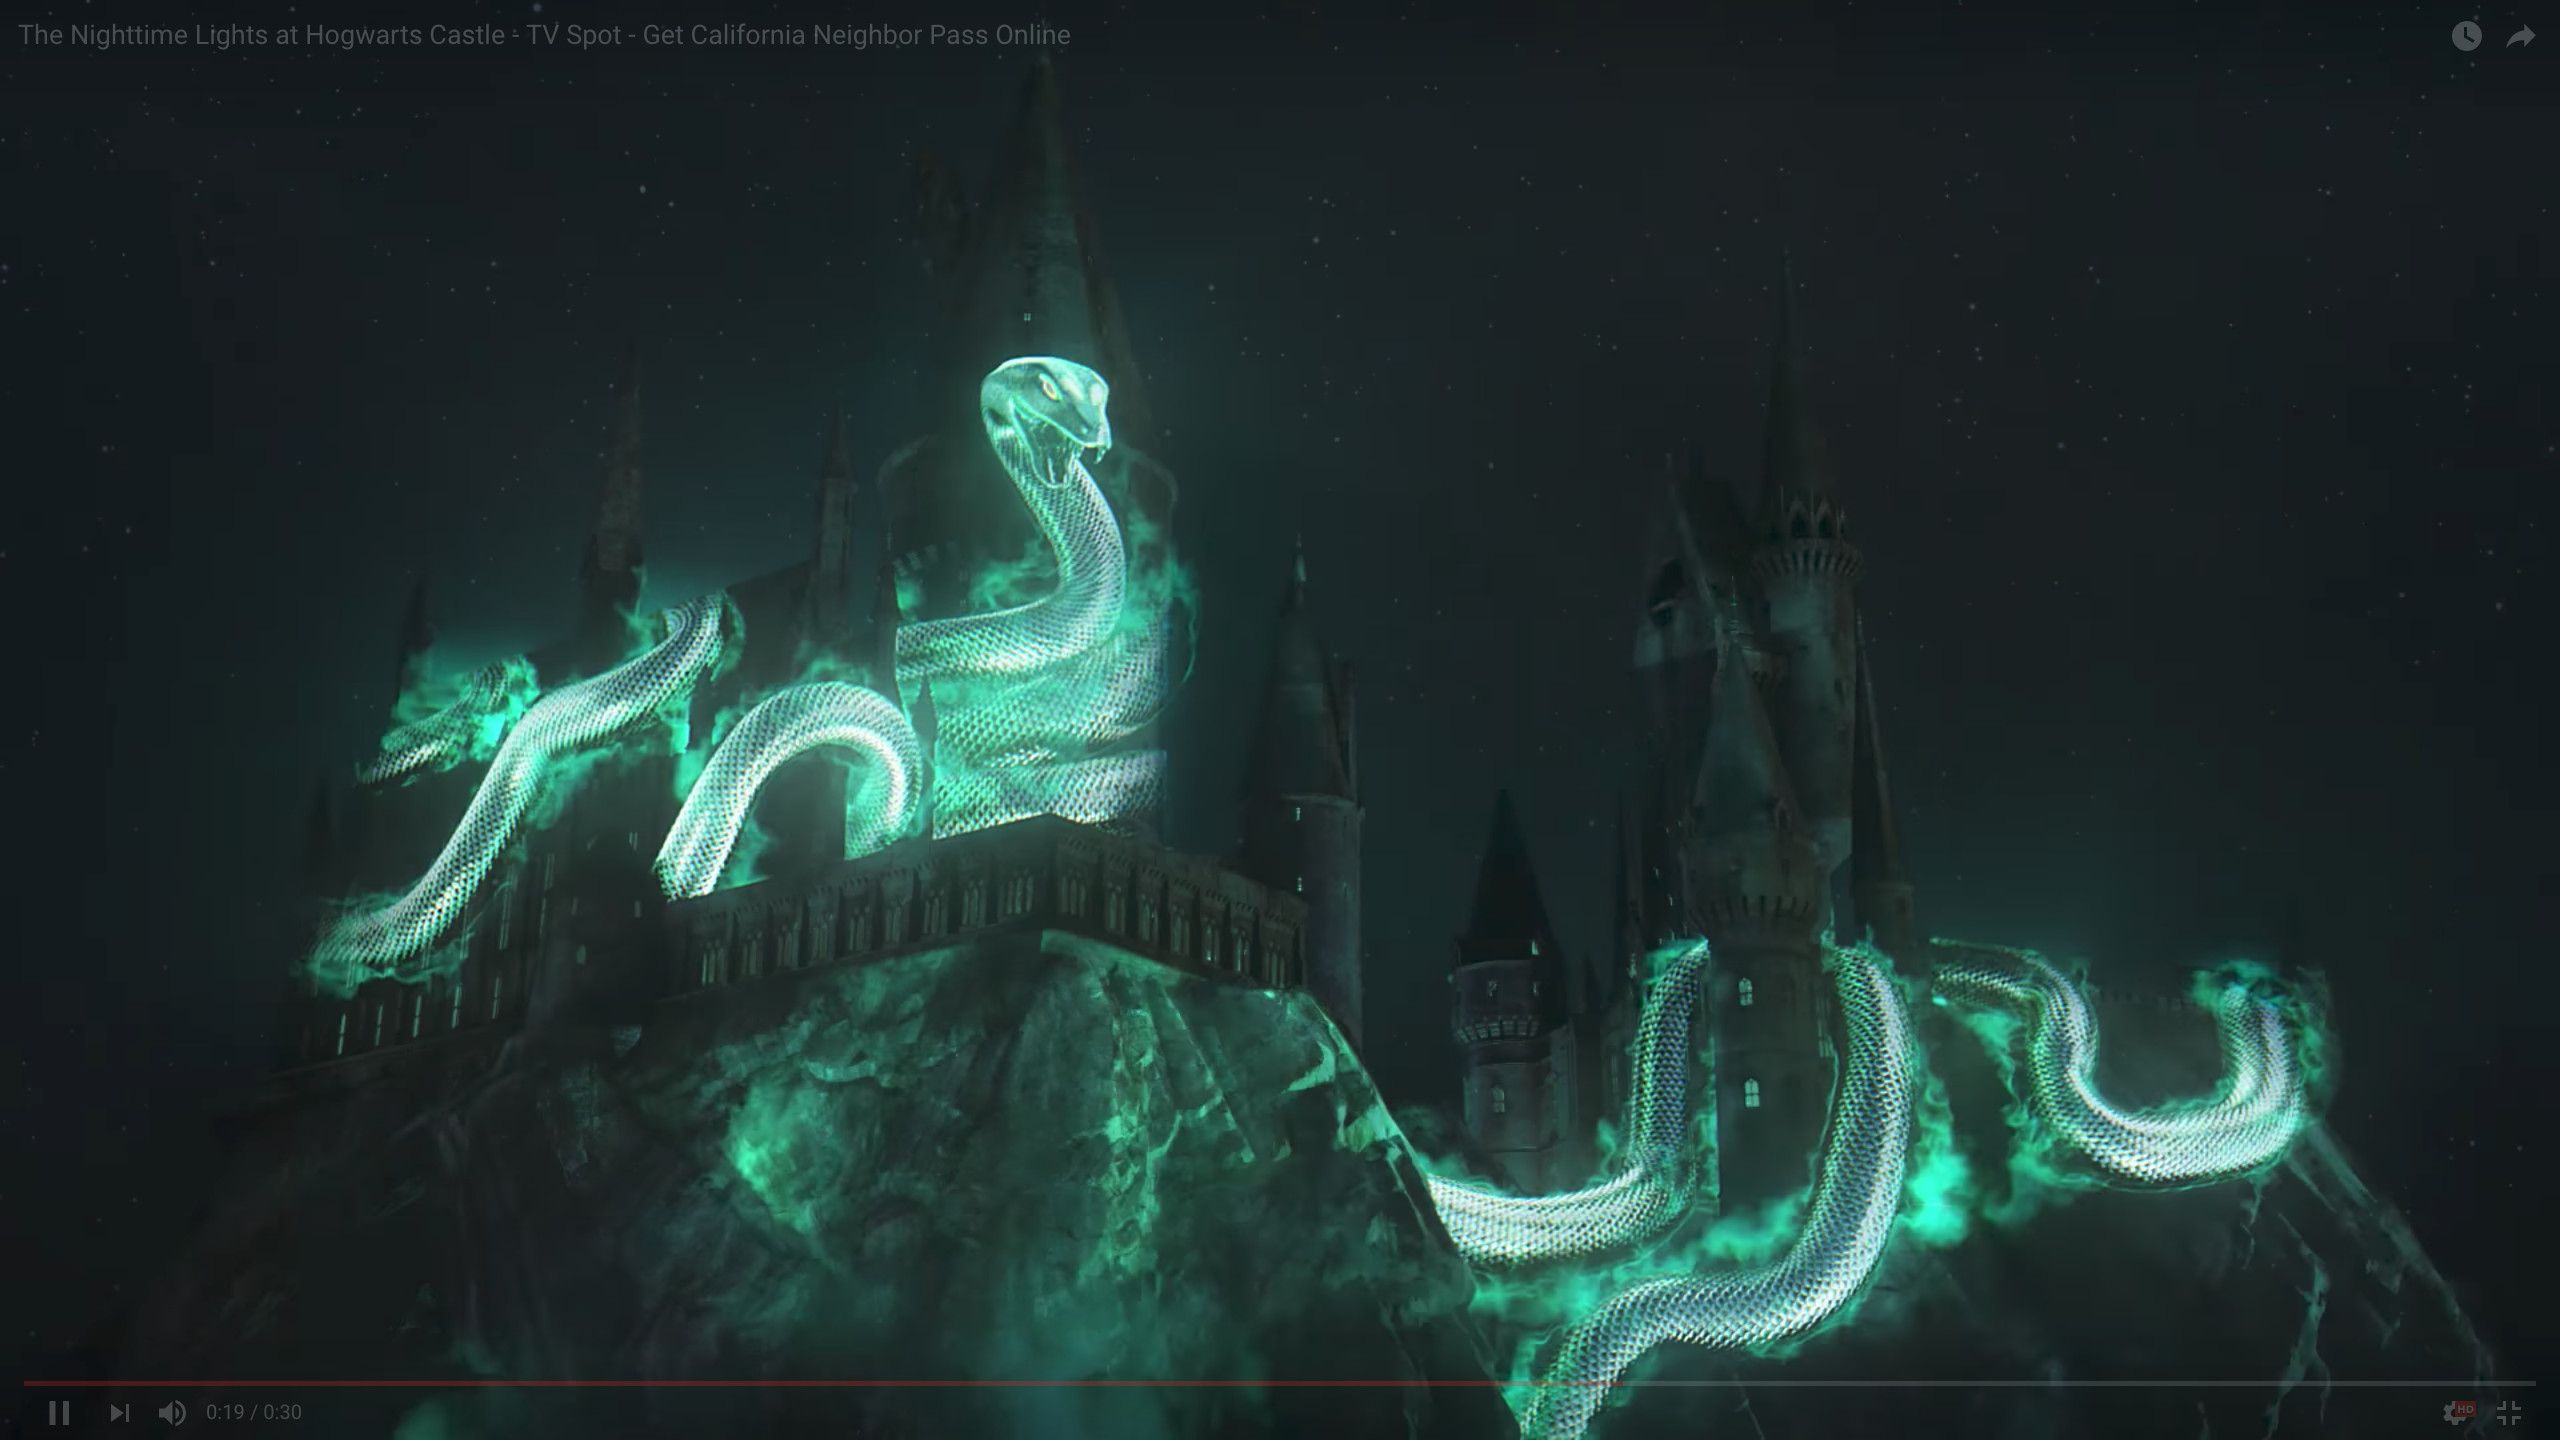 A screenshot of the nightgale lights at Hogwarts castle. - Harry Potter, Slytherin